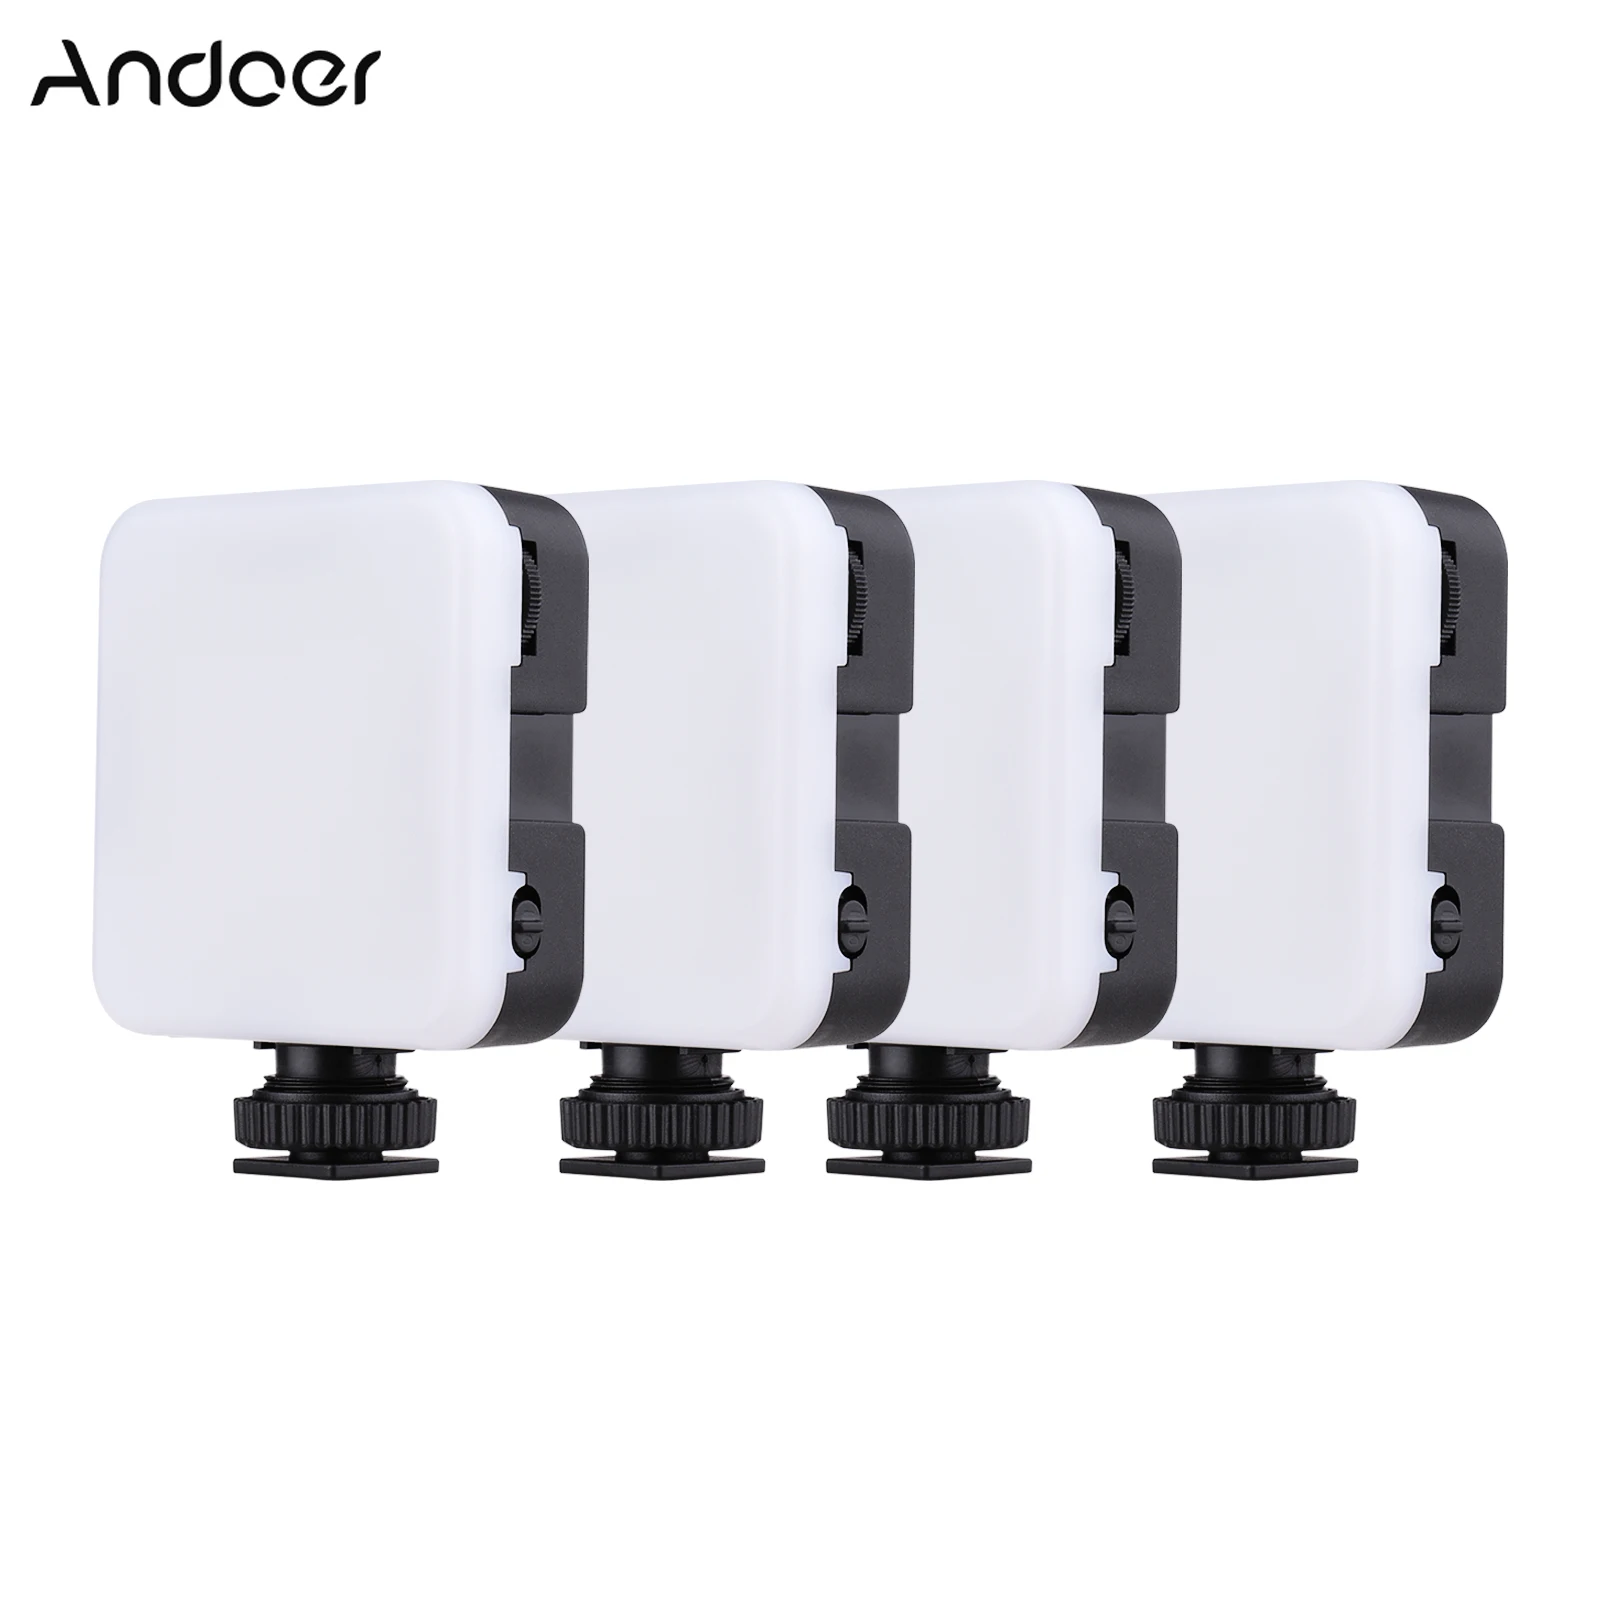 

Andoer 42LED Ultra Bright LED Video Photography Light 1/2/4pcs 6000K Stepless Cold Shoe Mount for DSLR Cameras Live Streaming